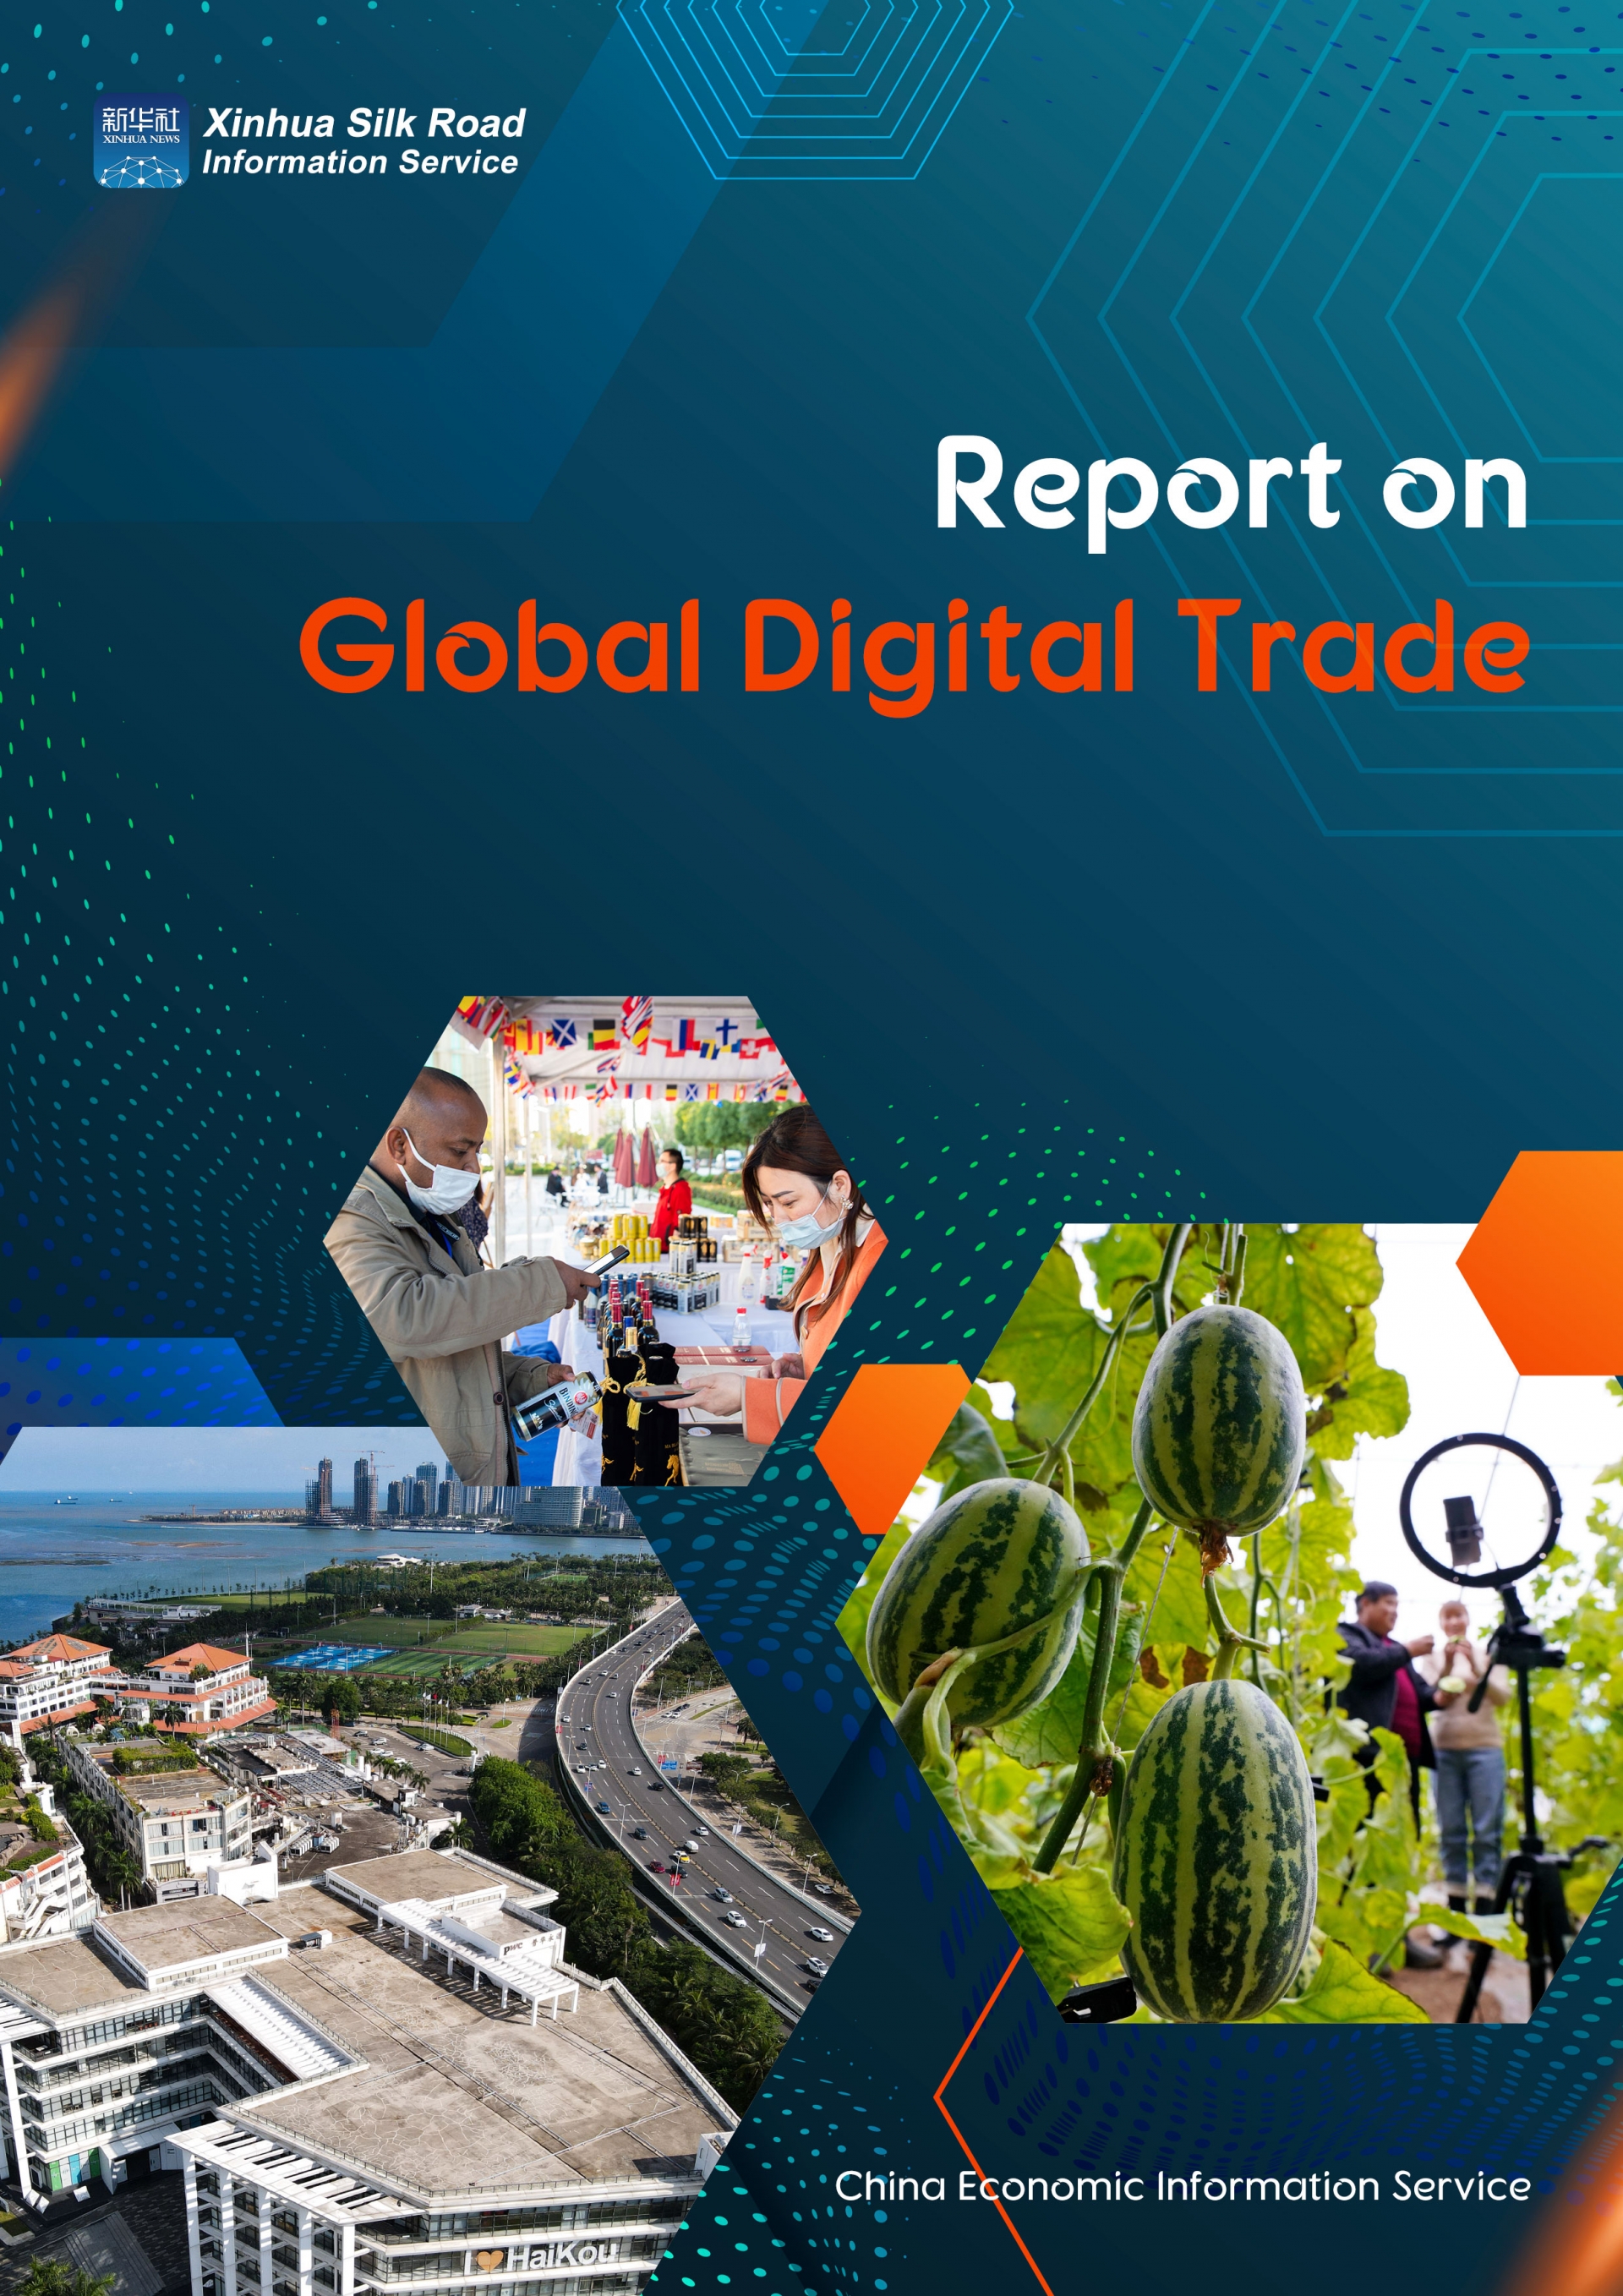 ​Xinhua Silk Road releases report on global digital trade